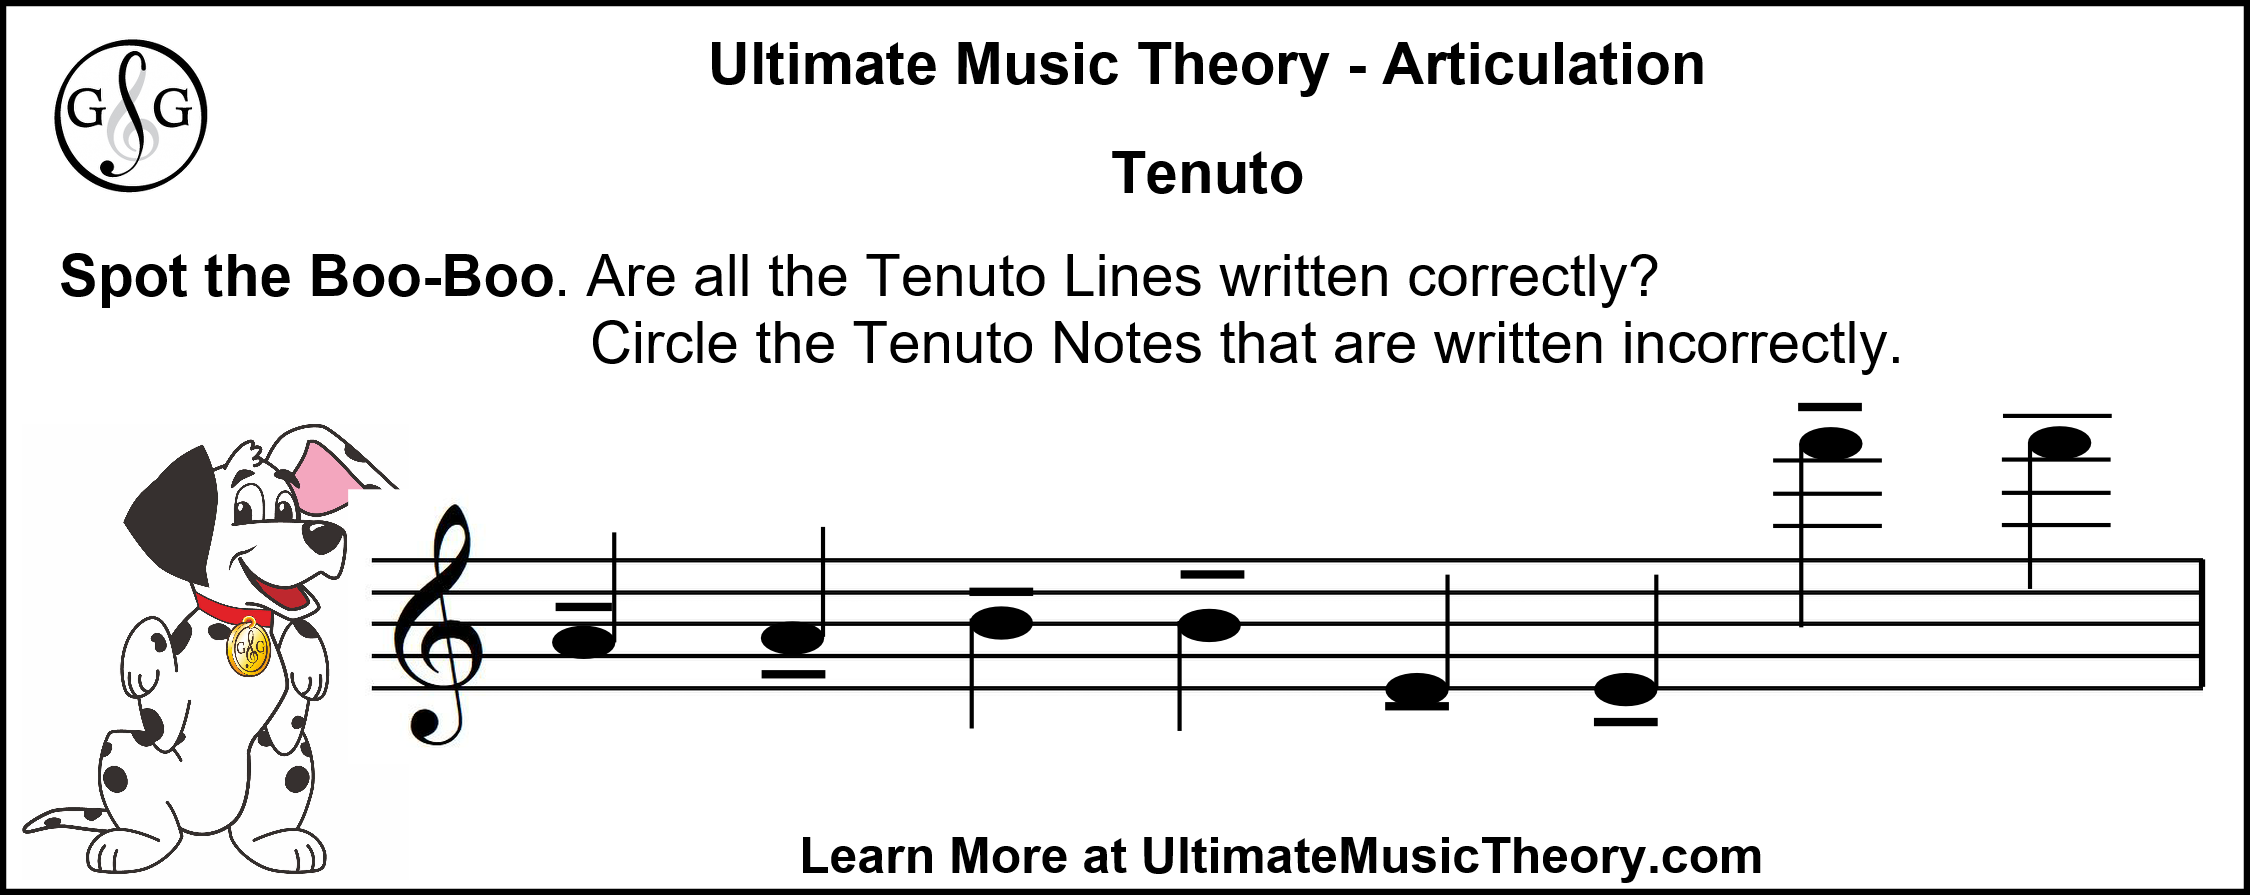 UMT Articulation - Tenuto - Spot the Boo Boo